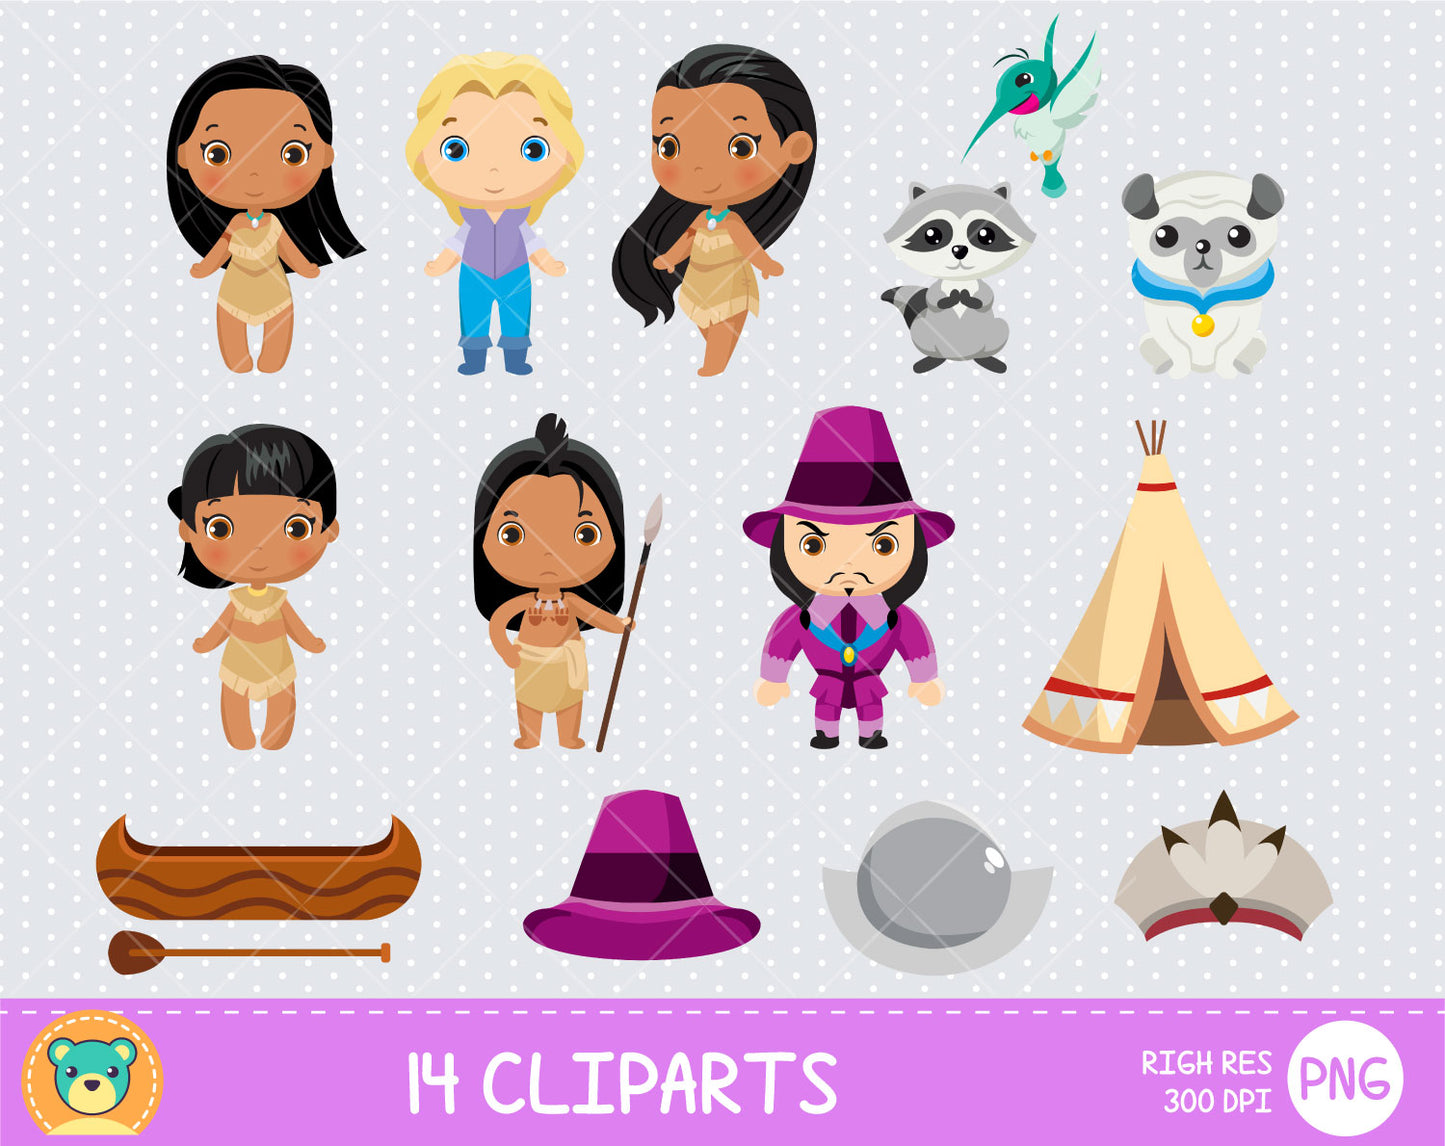 Cute Pocahontas clipart set, Disney Pocahontas clip art for decoration, scrapbooking, PNG 300 dpi, instant download